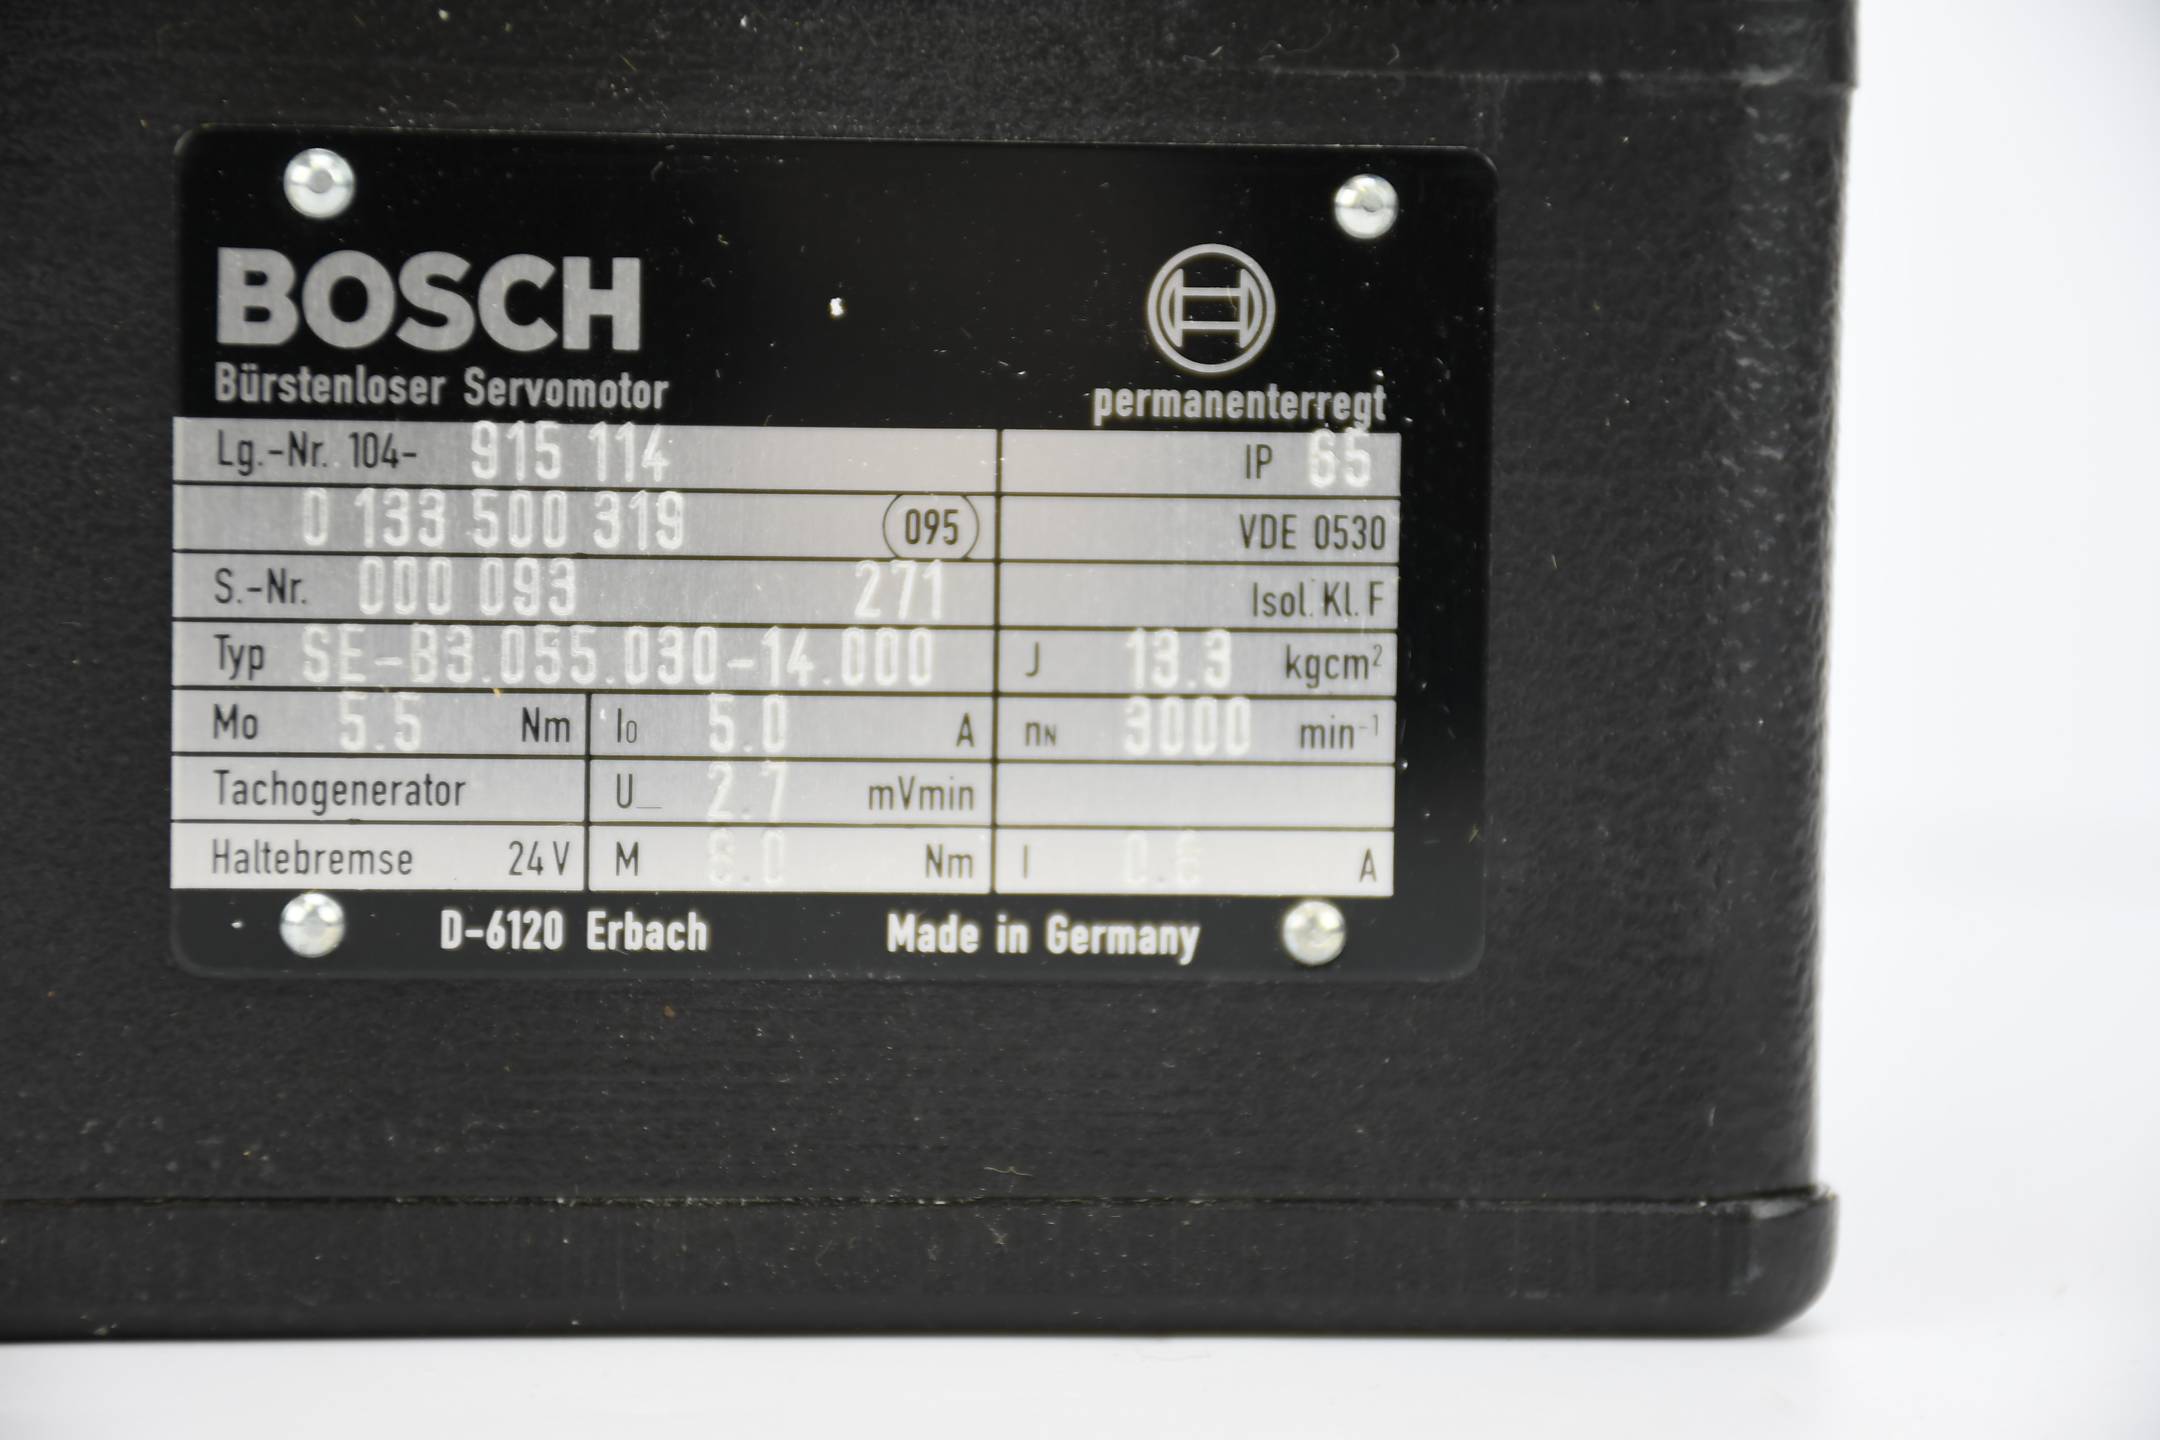 Bosch Rexroth Servo-Motor SE-B3.055.030-14.000 ( 0 133 500 319 ) 915 114
